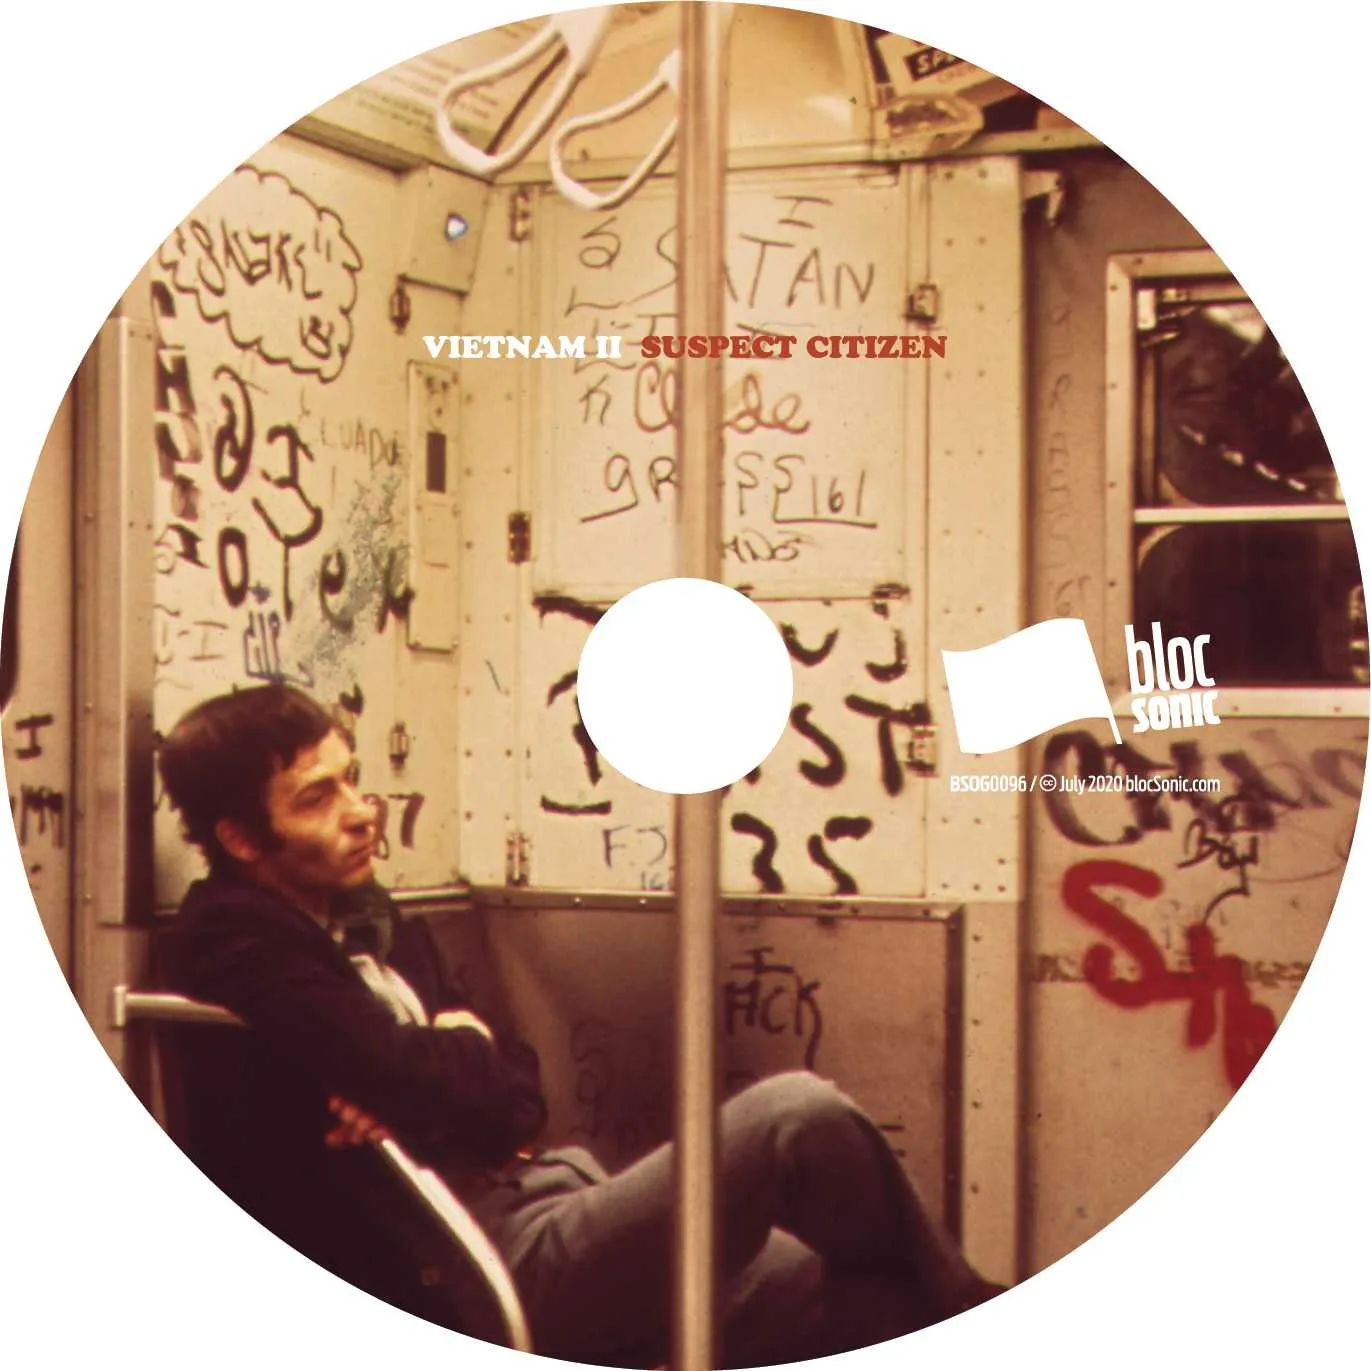 Album disc for “Suspect Citizen” by Vietnam II